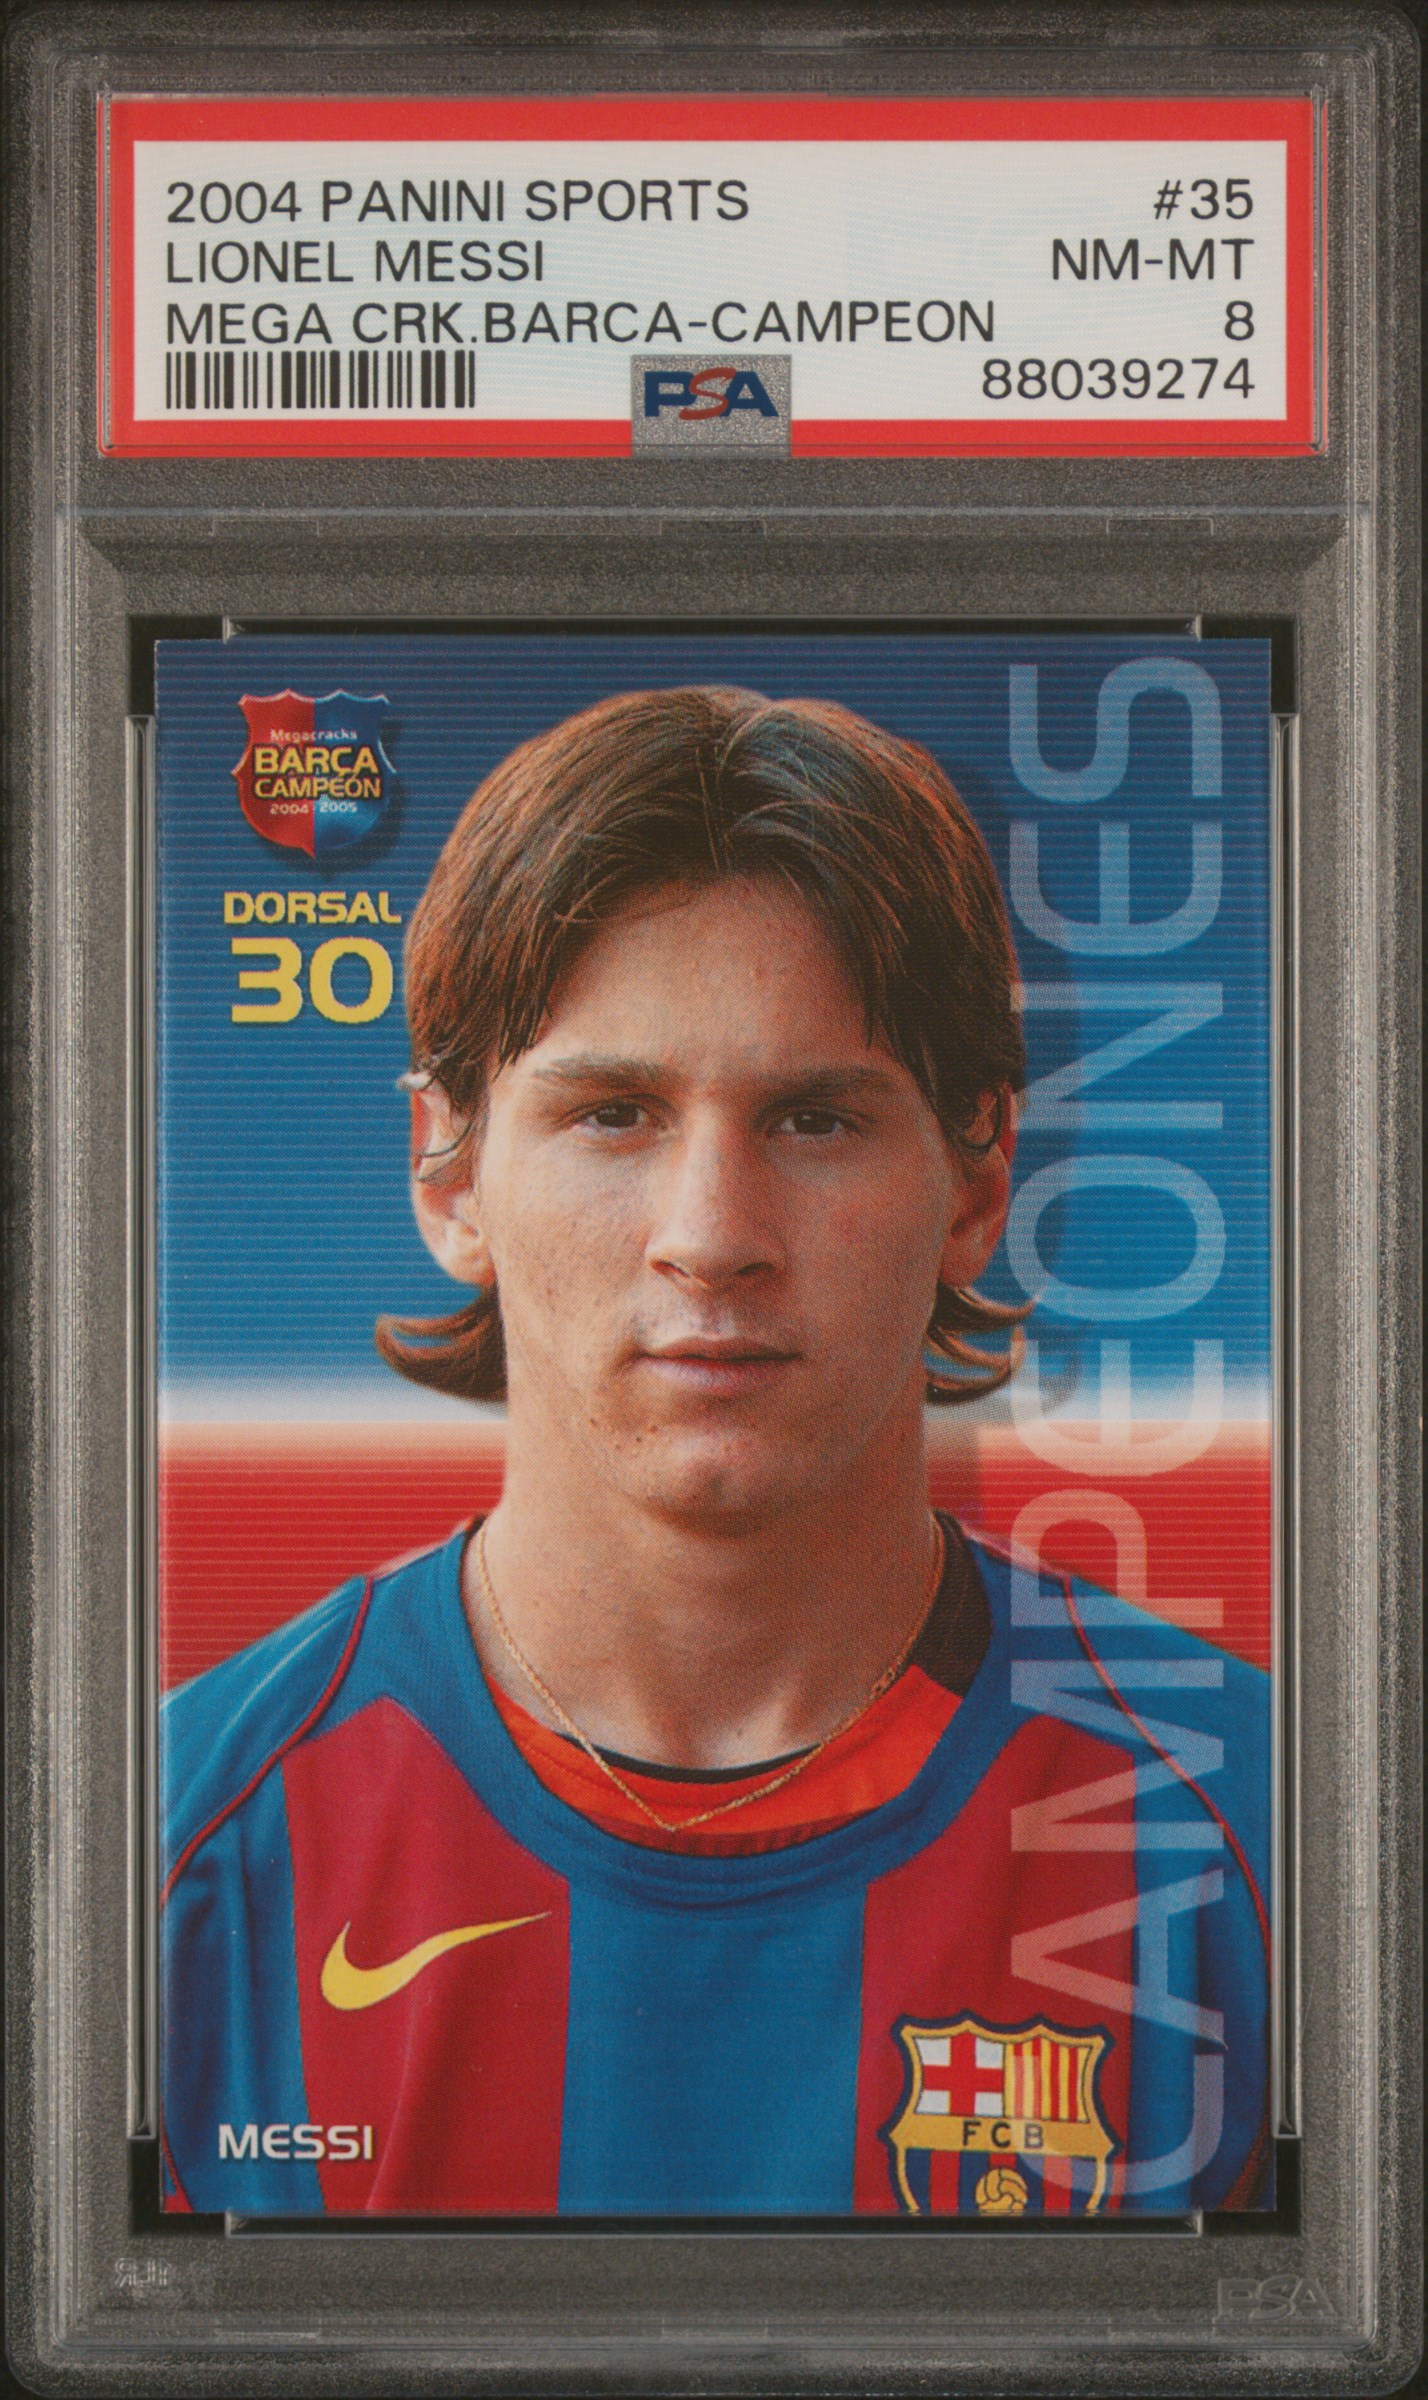 2004 Panini Sports Mega Cracks Barca Campeon (Spanish) #35 Lionel Messi Rookie Card – PSA NM-MT 8